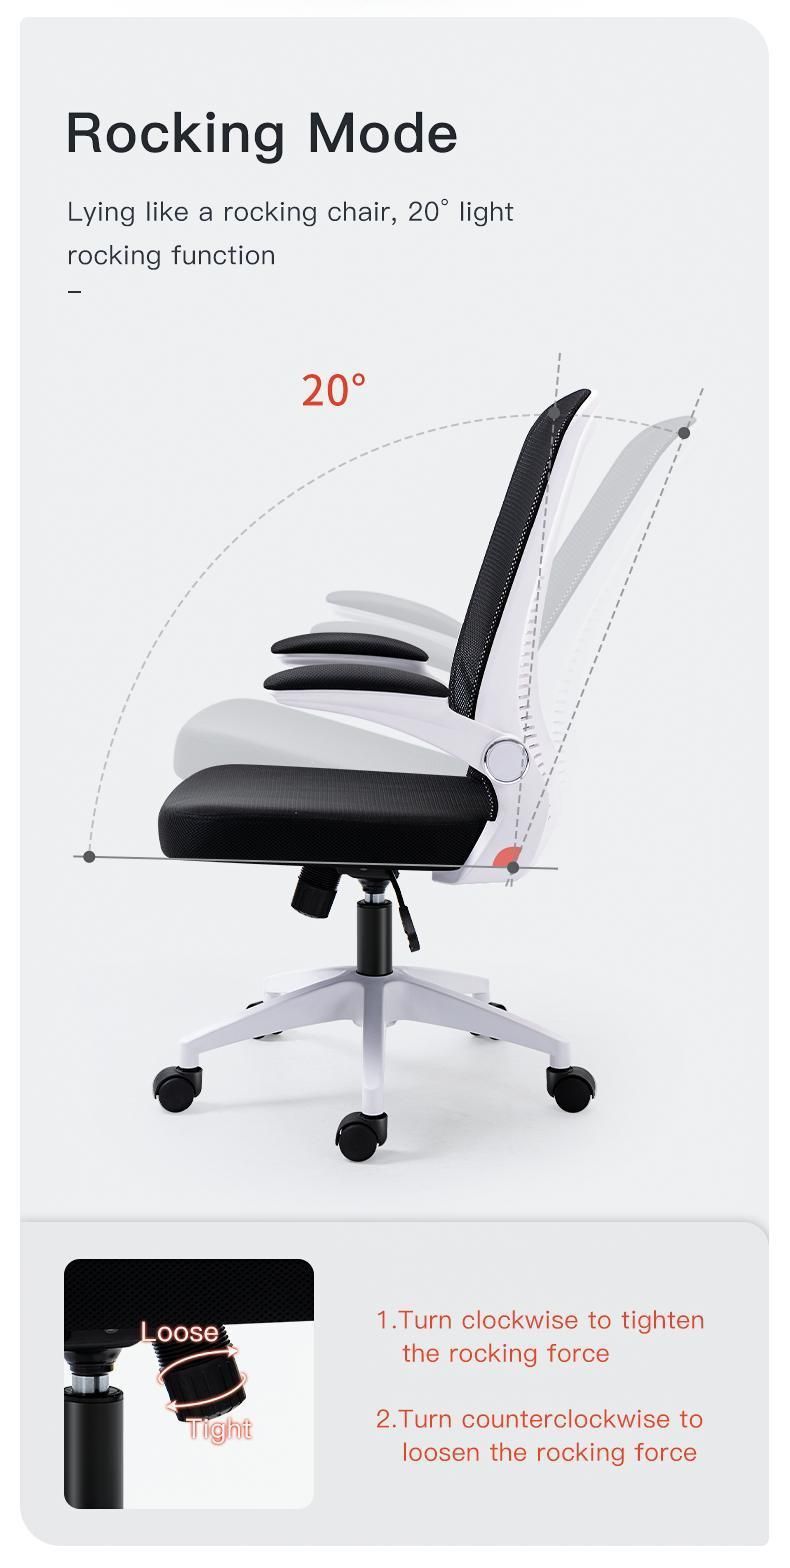 Adjustable Executive Ergonomic Cheap Comfortable Flip-up Arms Sillas PARA Oficina Swivel Mesh Office Computer Chair